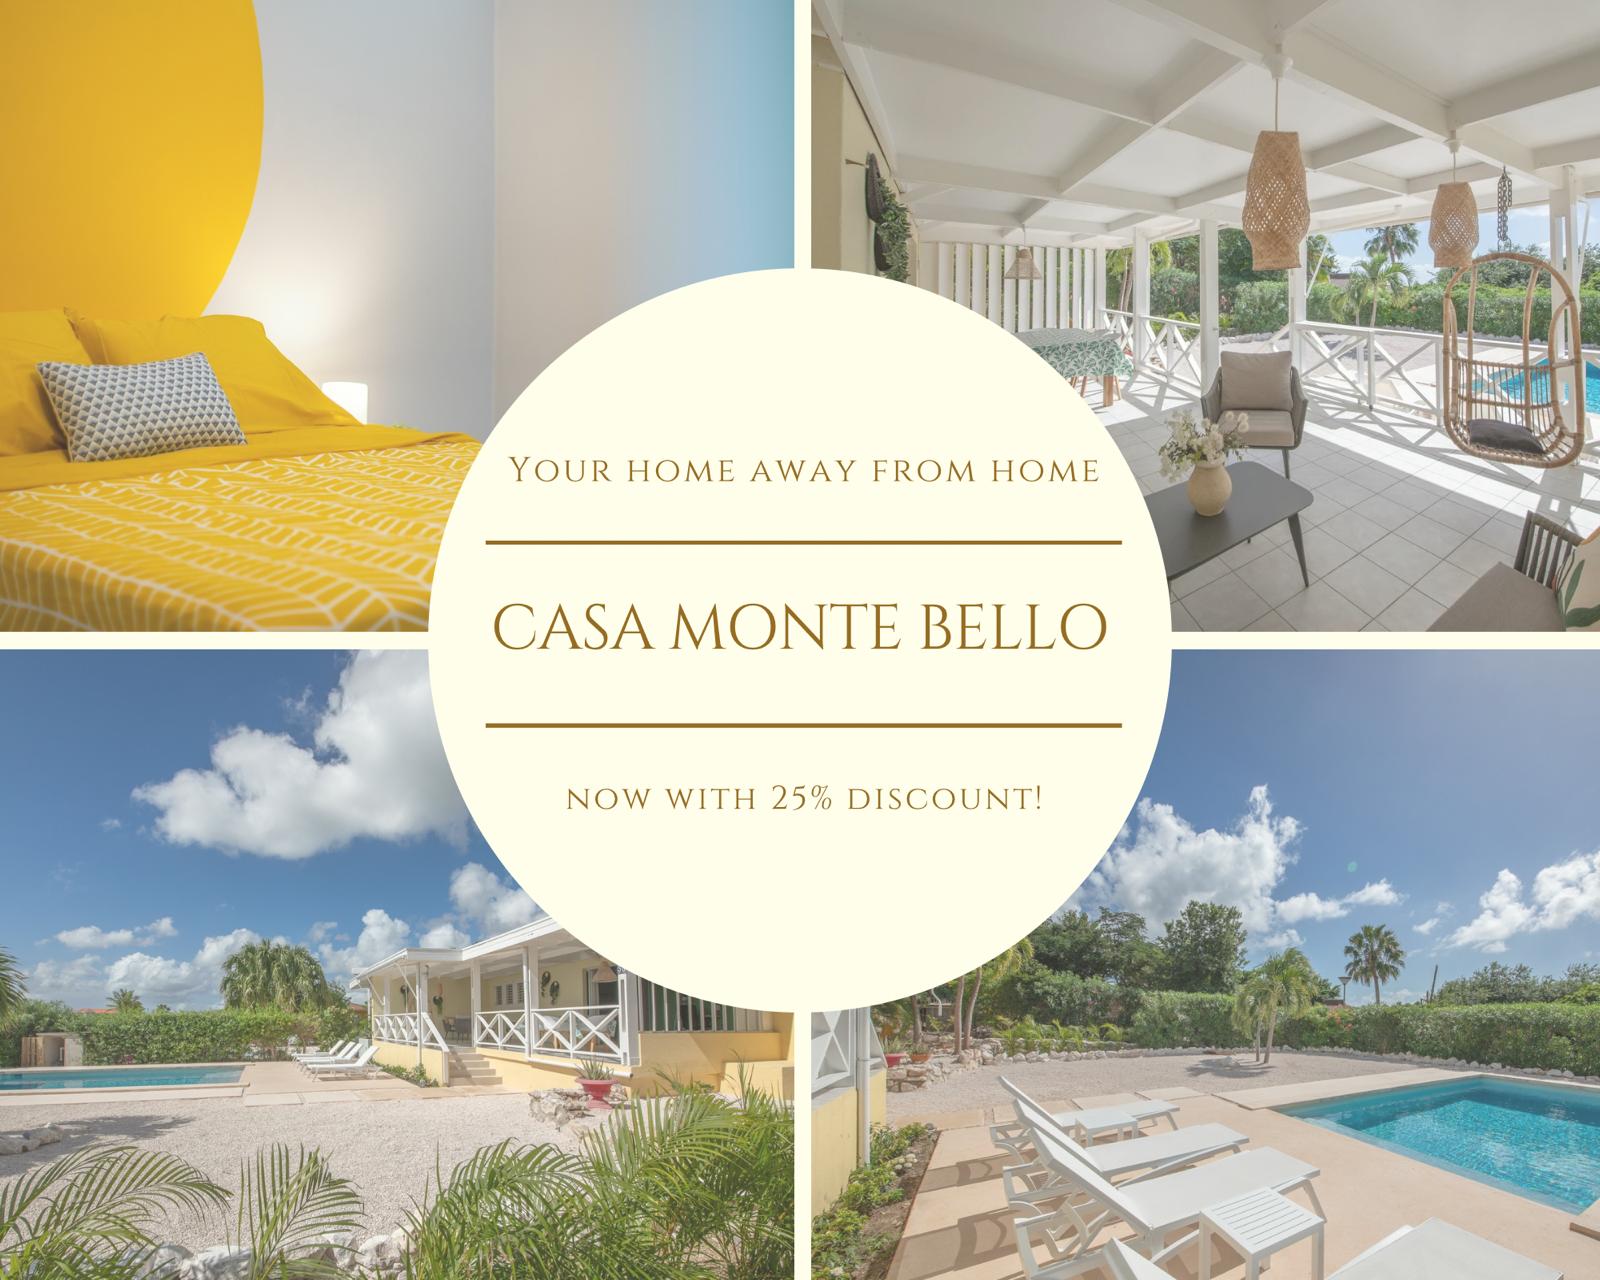 Casa Monte Bello 25% discount